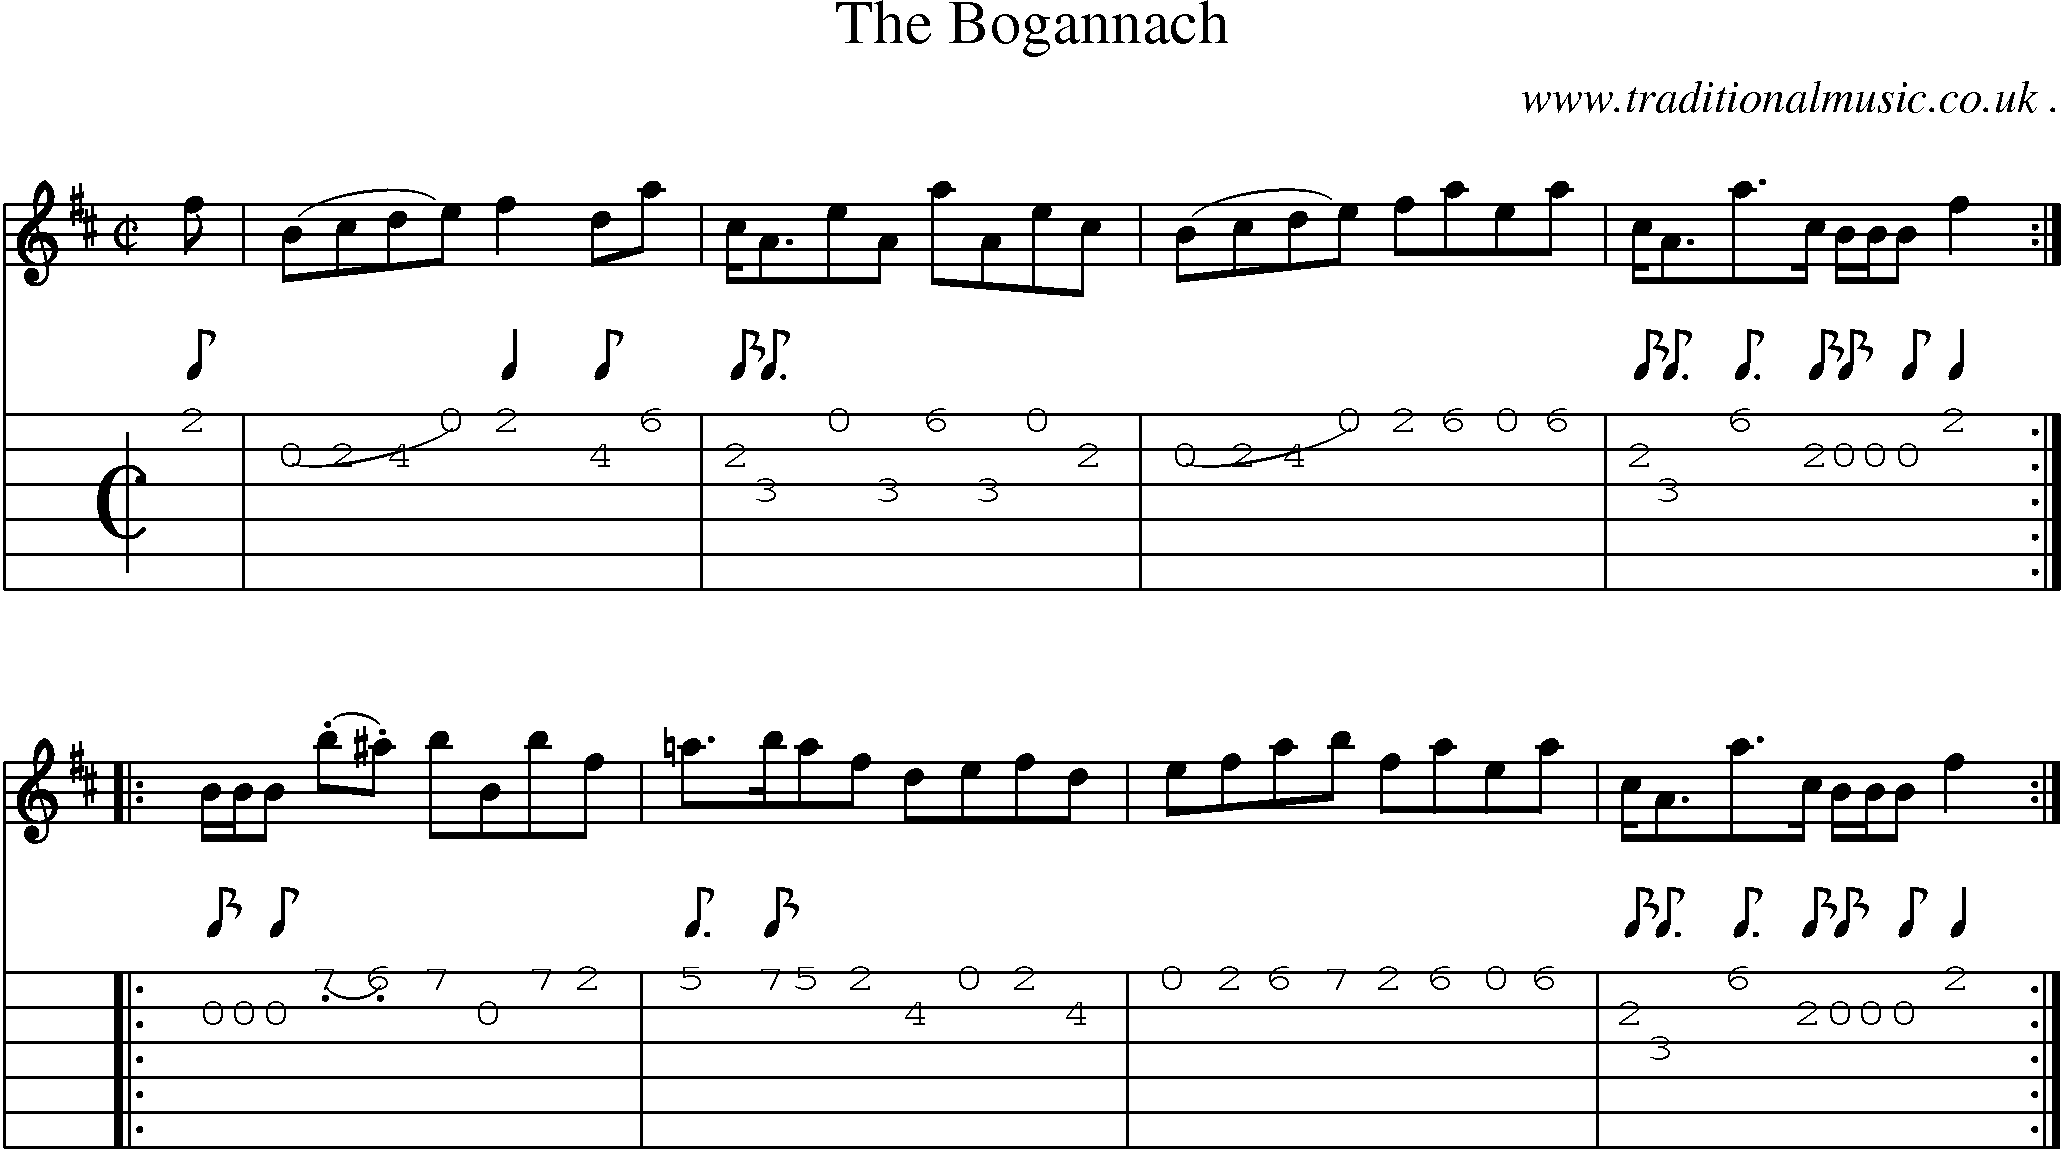 Sheet-music  score, Chords and Guitar Tabs for The Bogannach